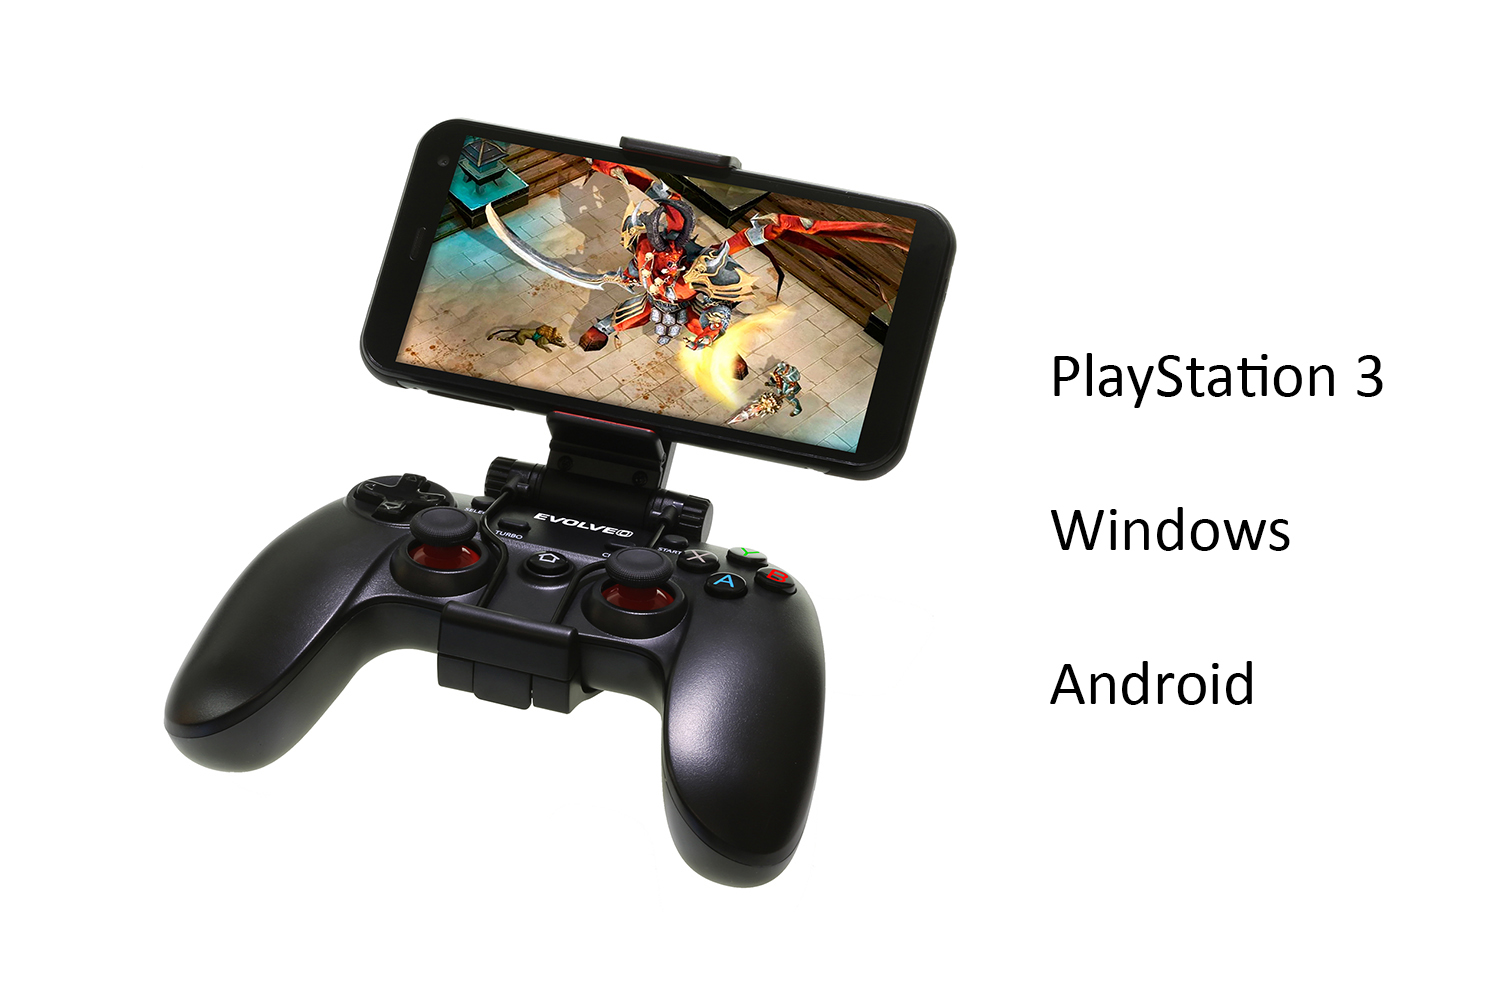 EVOLVEO Fighter F1, bezdrátový gamepad pro PC, PlayStation 3, Android box/ smartphone 